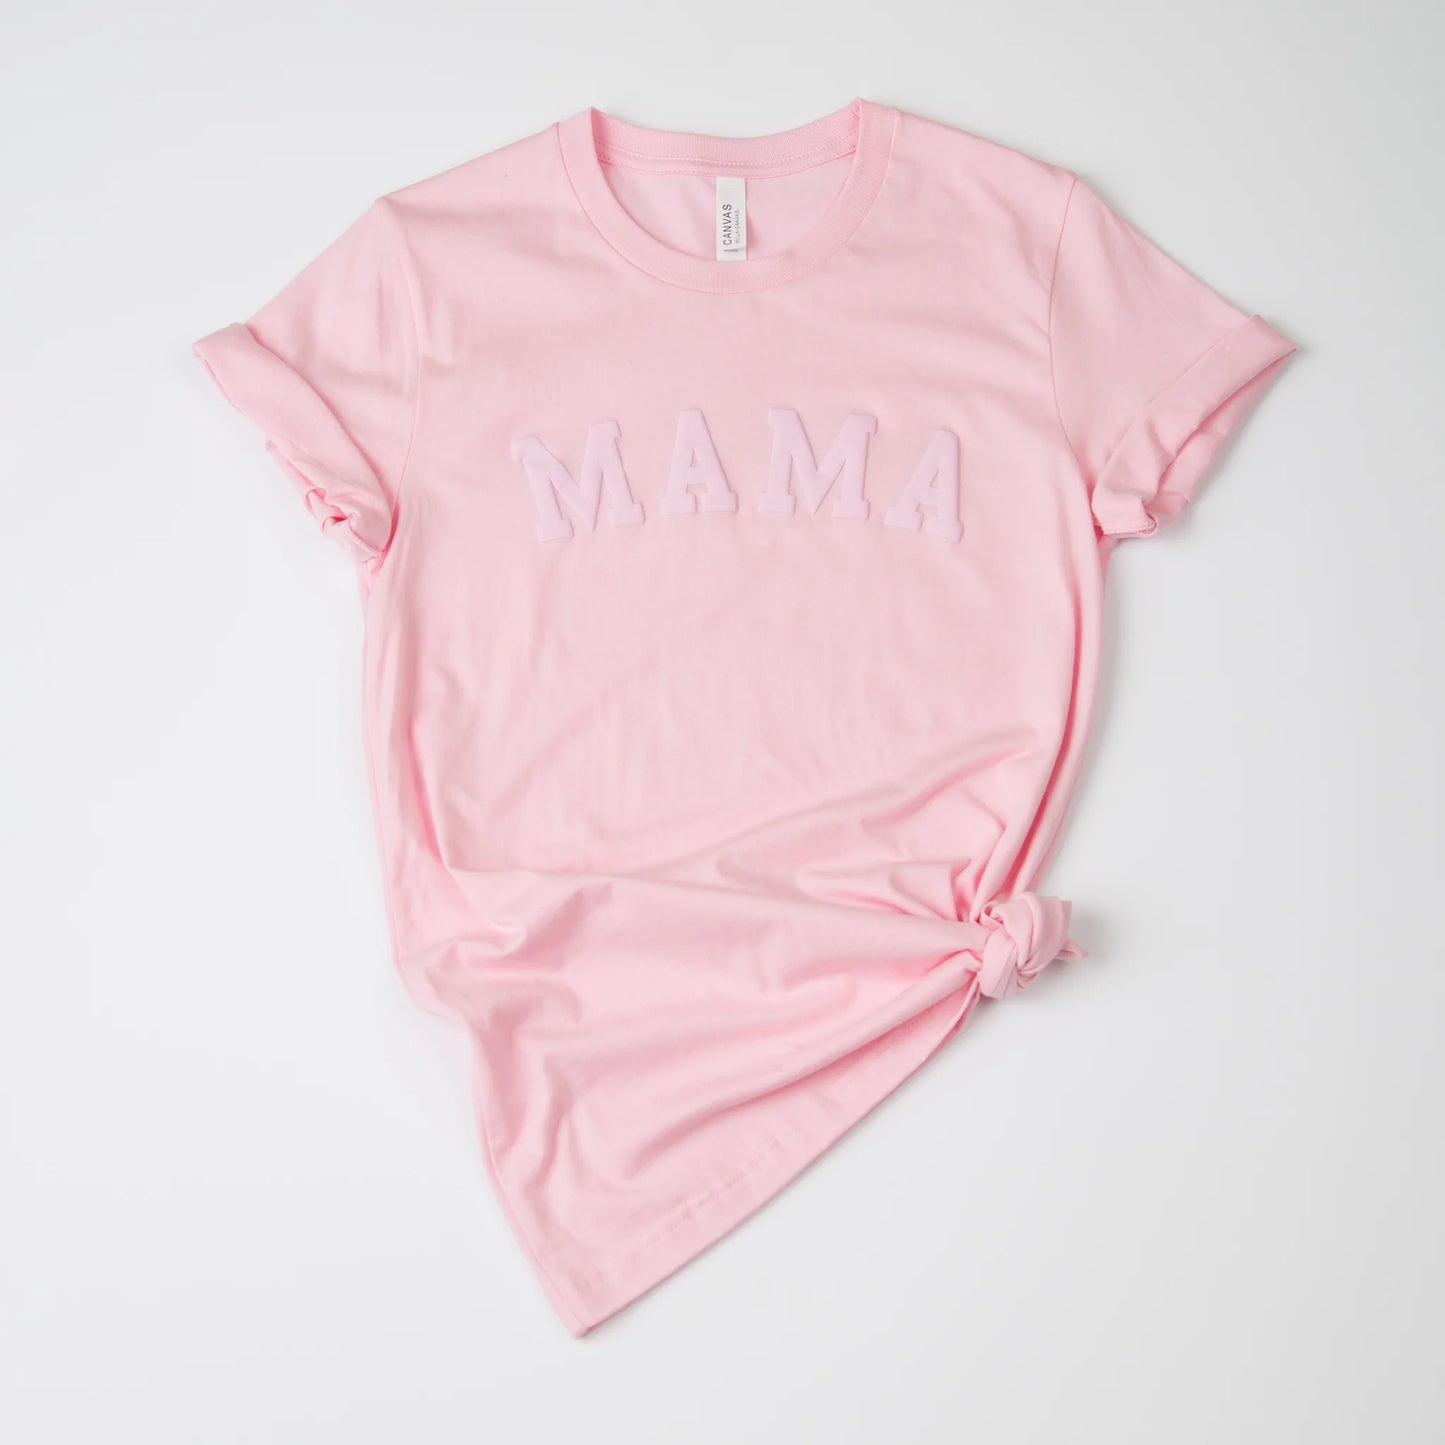 Puff Mama Bold Women's Graphic Tee, Pink